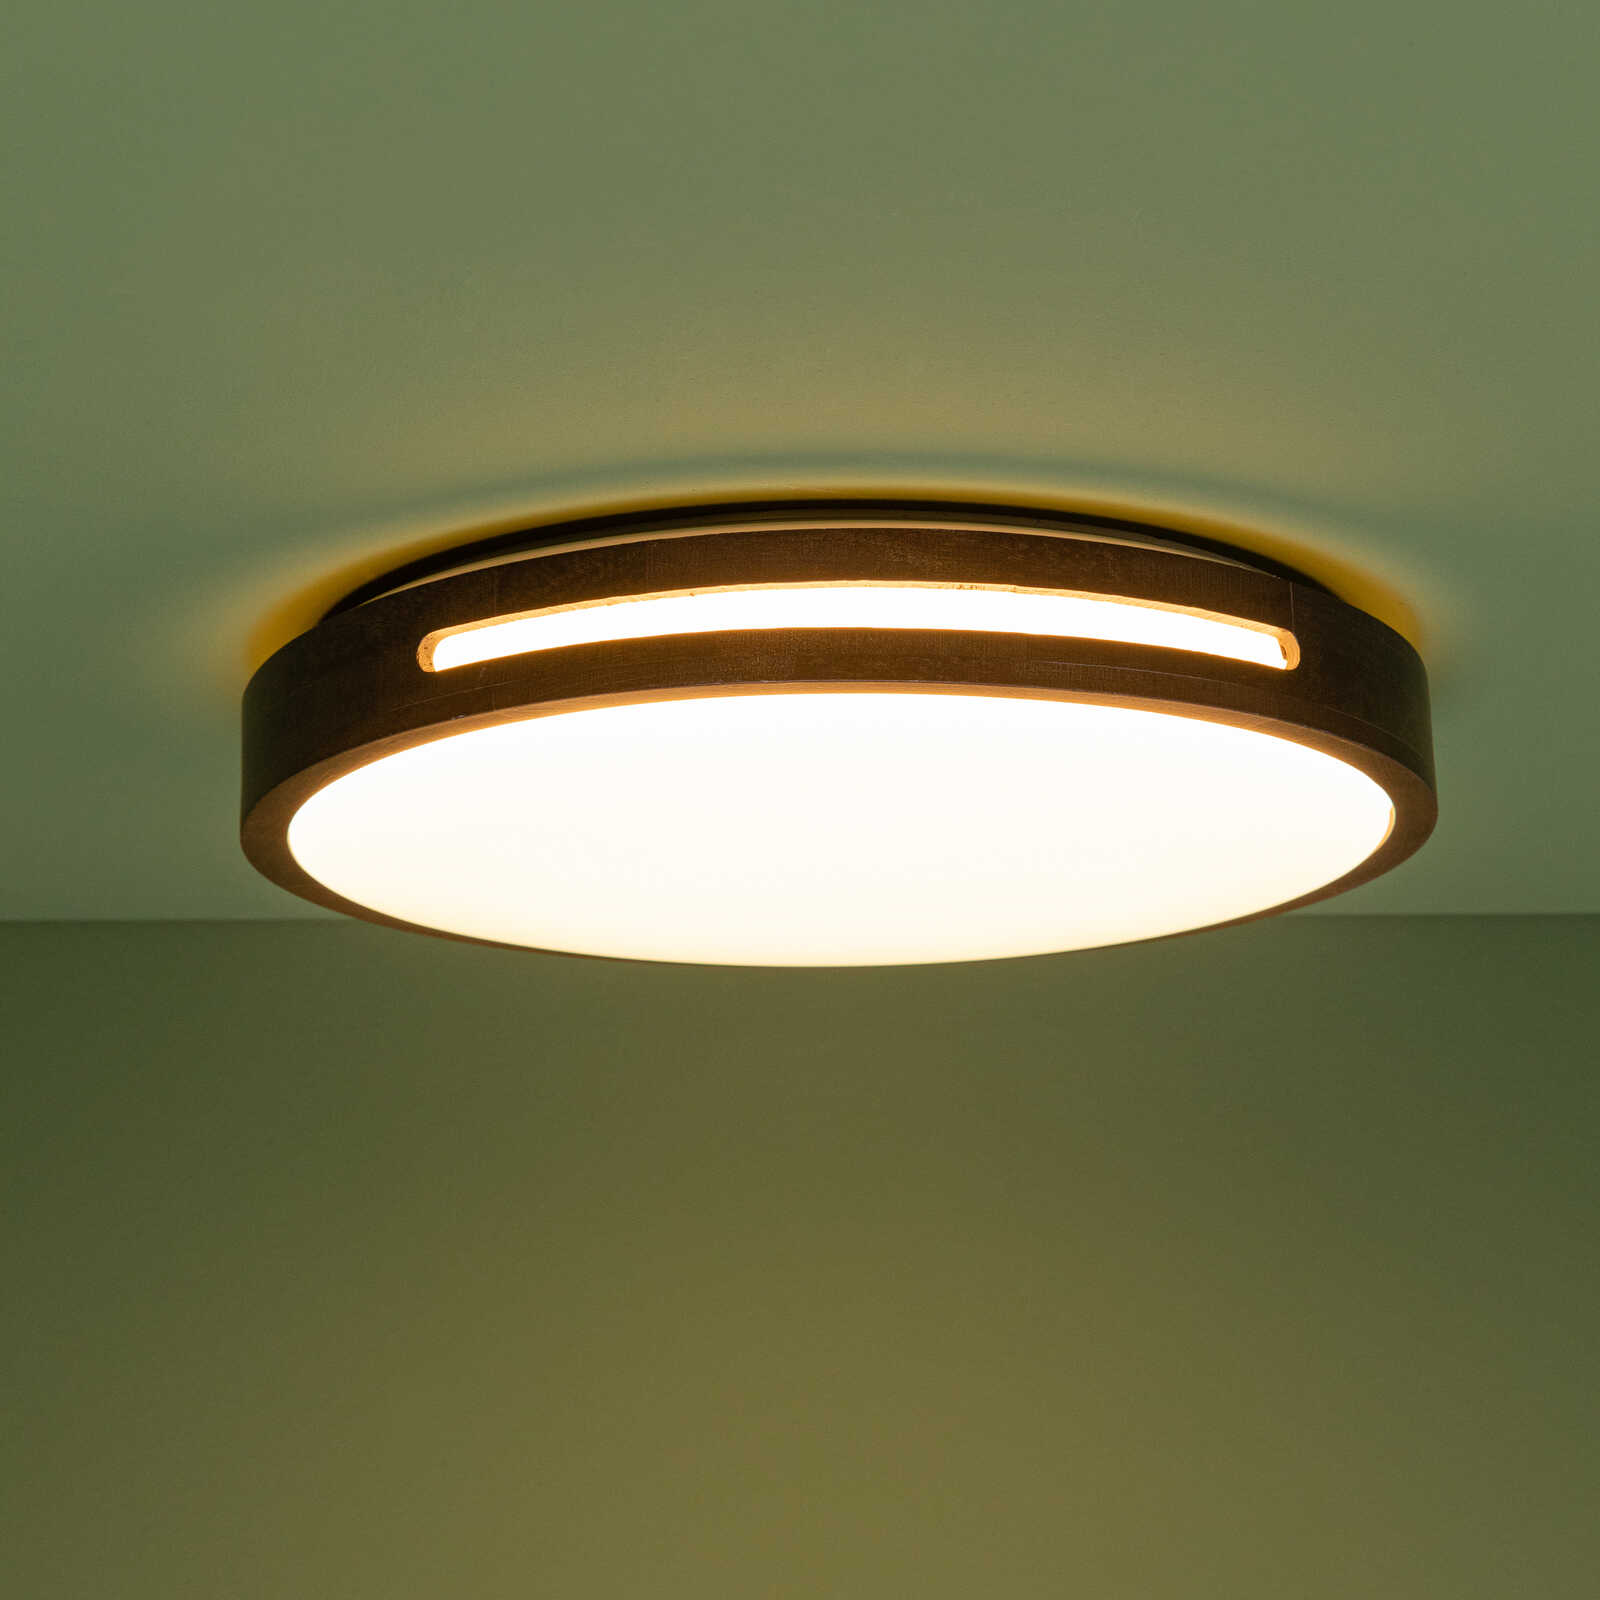             Wooden ceiling light - Viola 1 - Brown
        